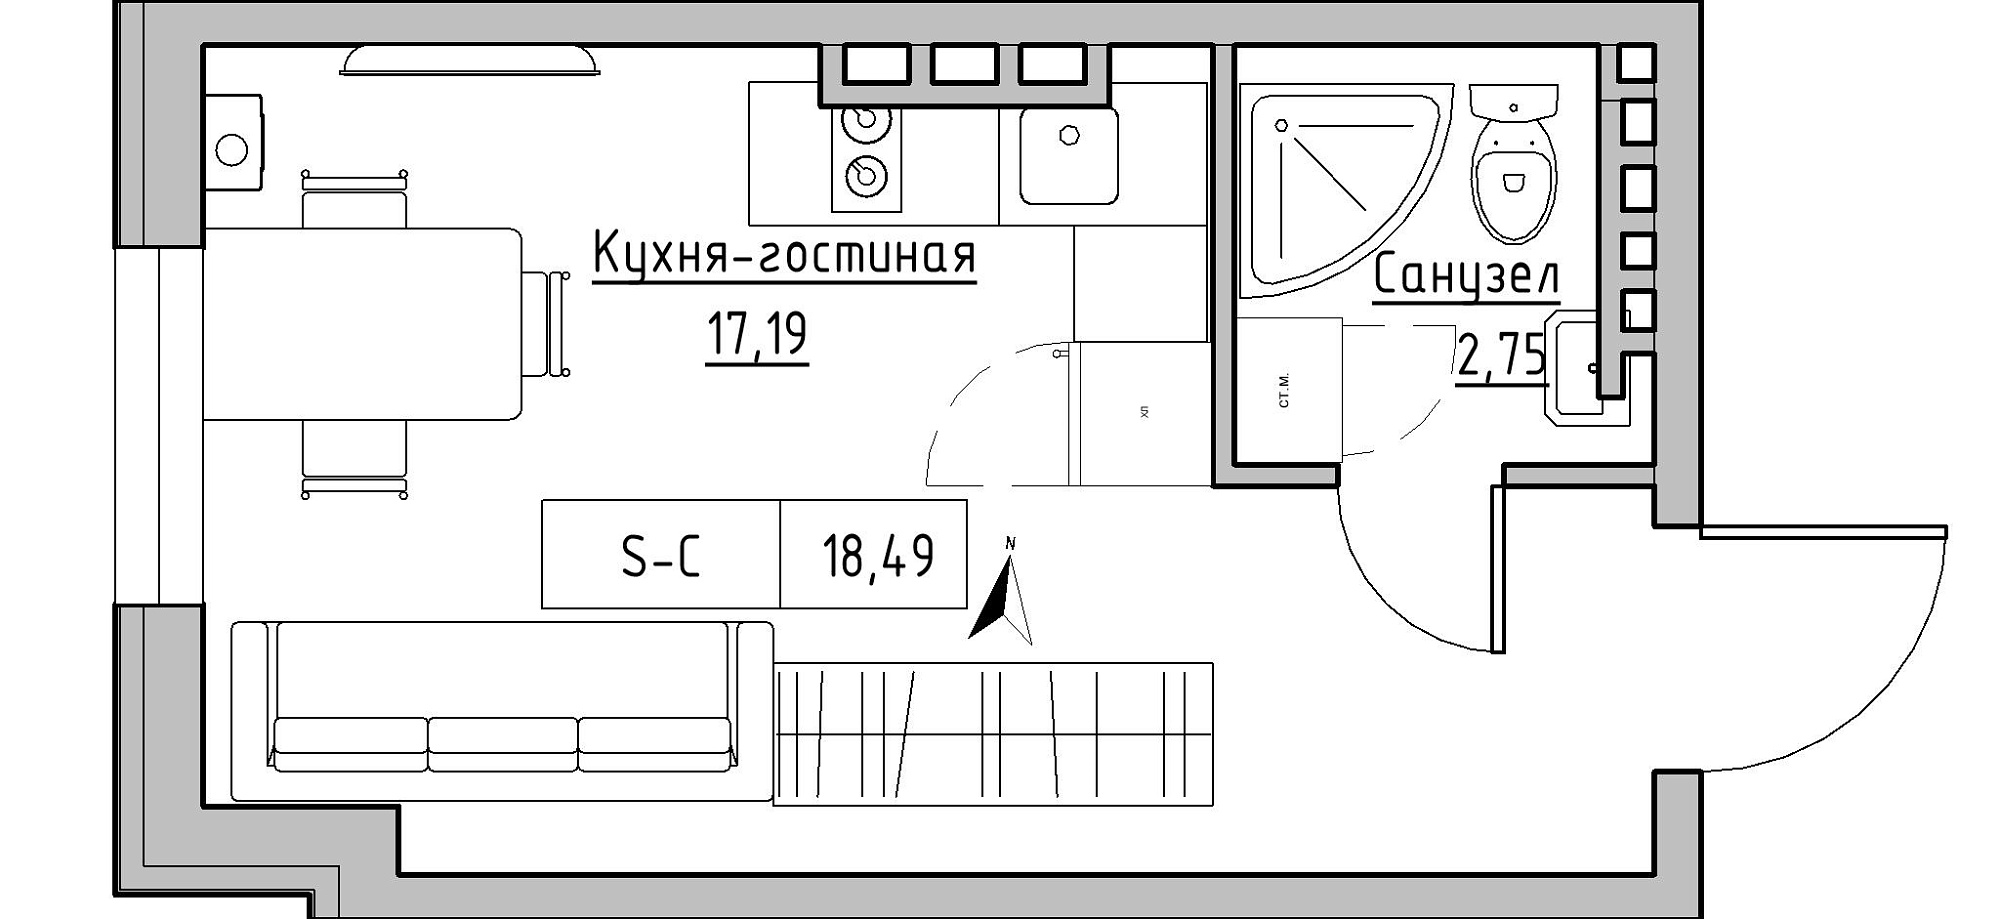 Planning Smart flats area 18.49m2, KS-024-05/0014.